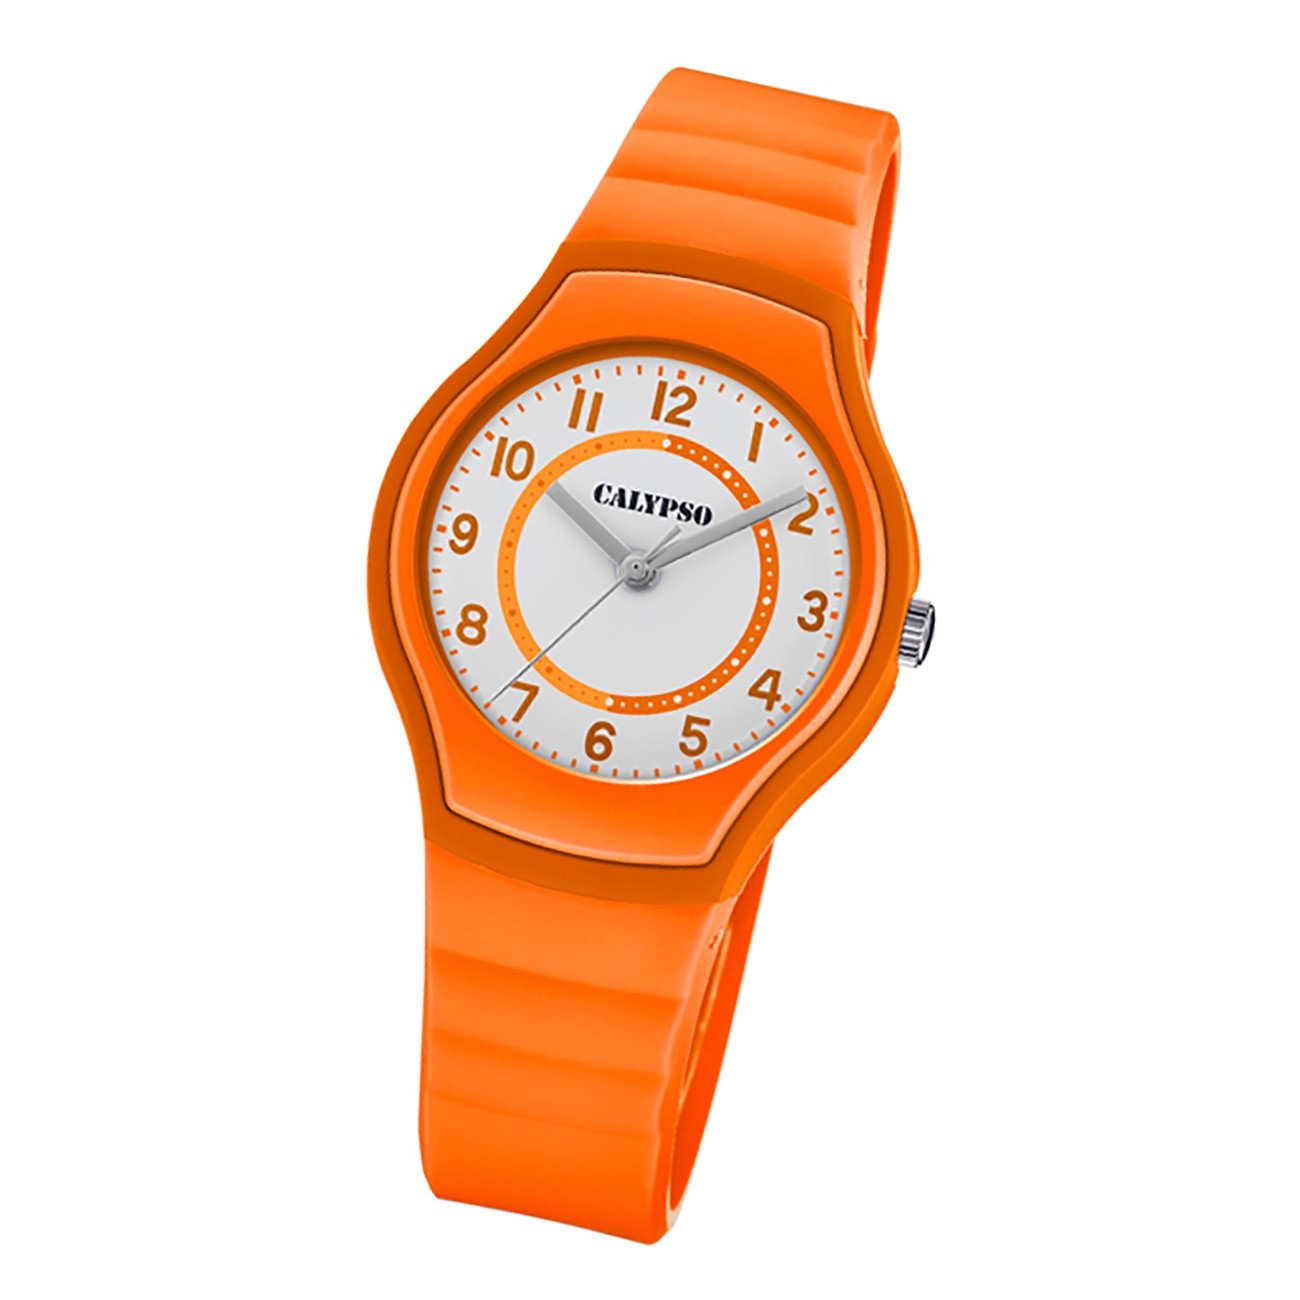 Calypso Jugend Armbanduhr Junior K5806/5 Analog Kunststoff orange UK5806/5